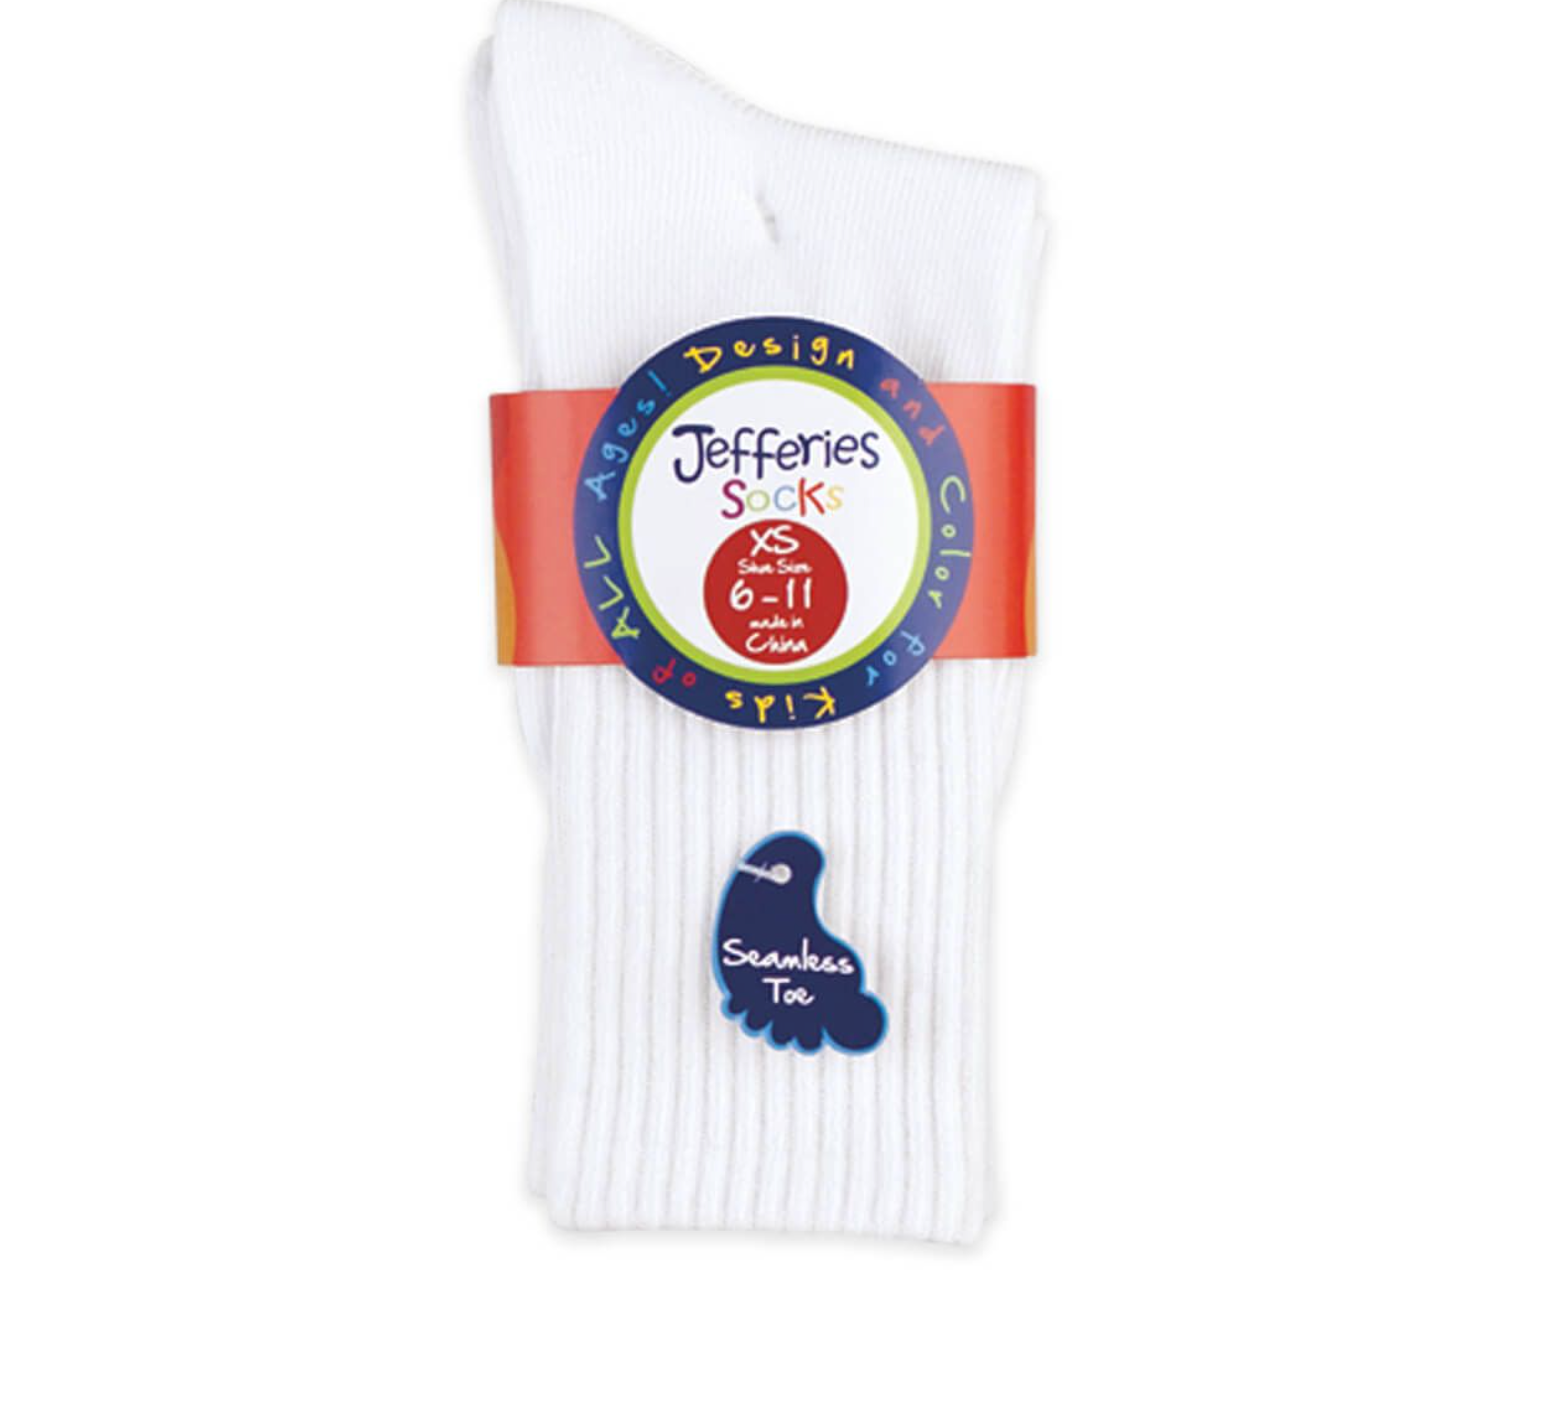 Jefferies Socks Smooth Toe Sport Crew Non-Cushion Socks 3 Pair Pack